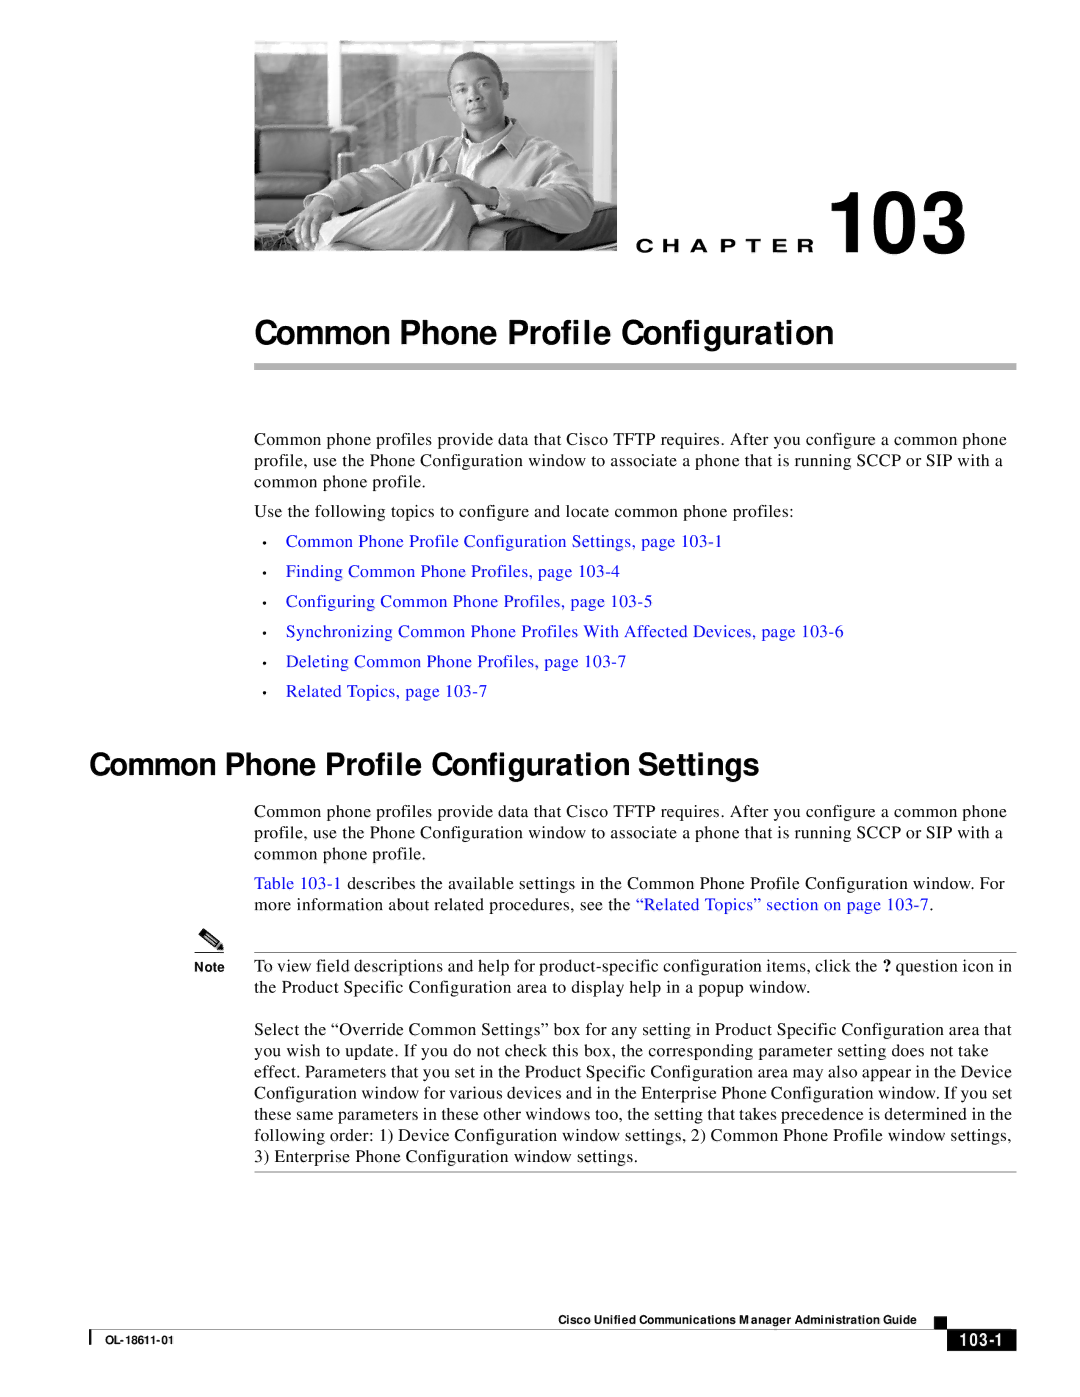 Cisco Systems OL-18611-01 manual Common Phone Profile Configuration Settings, 103-1 